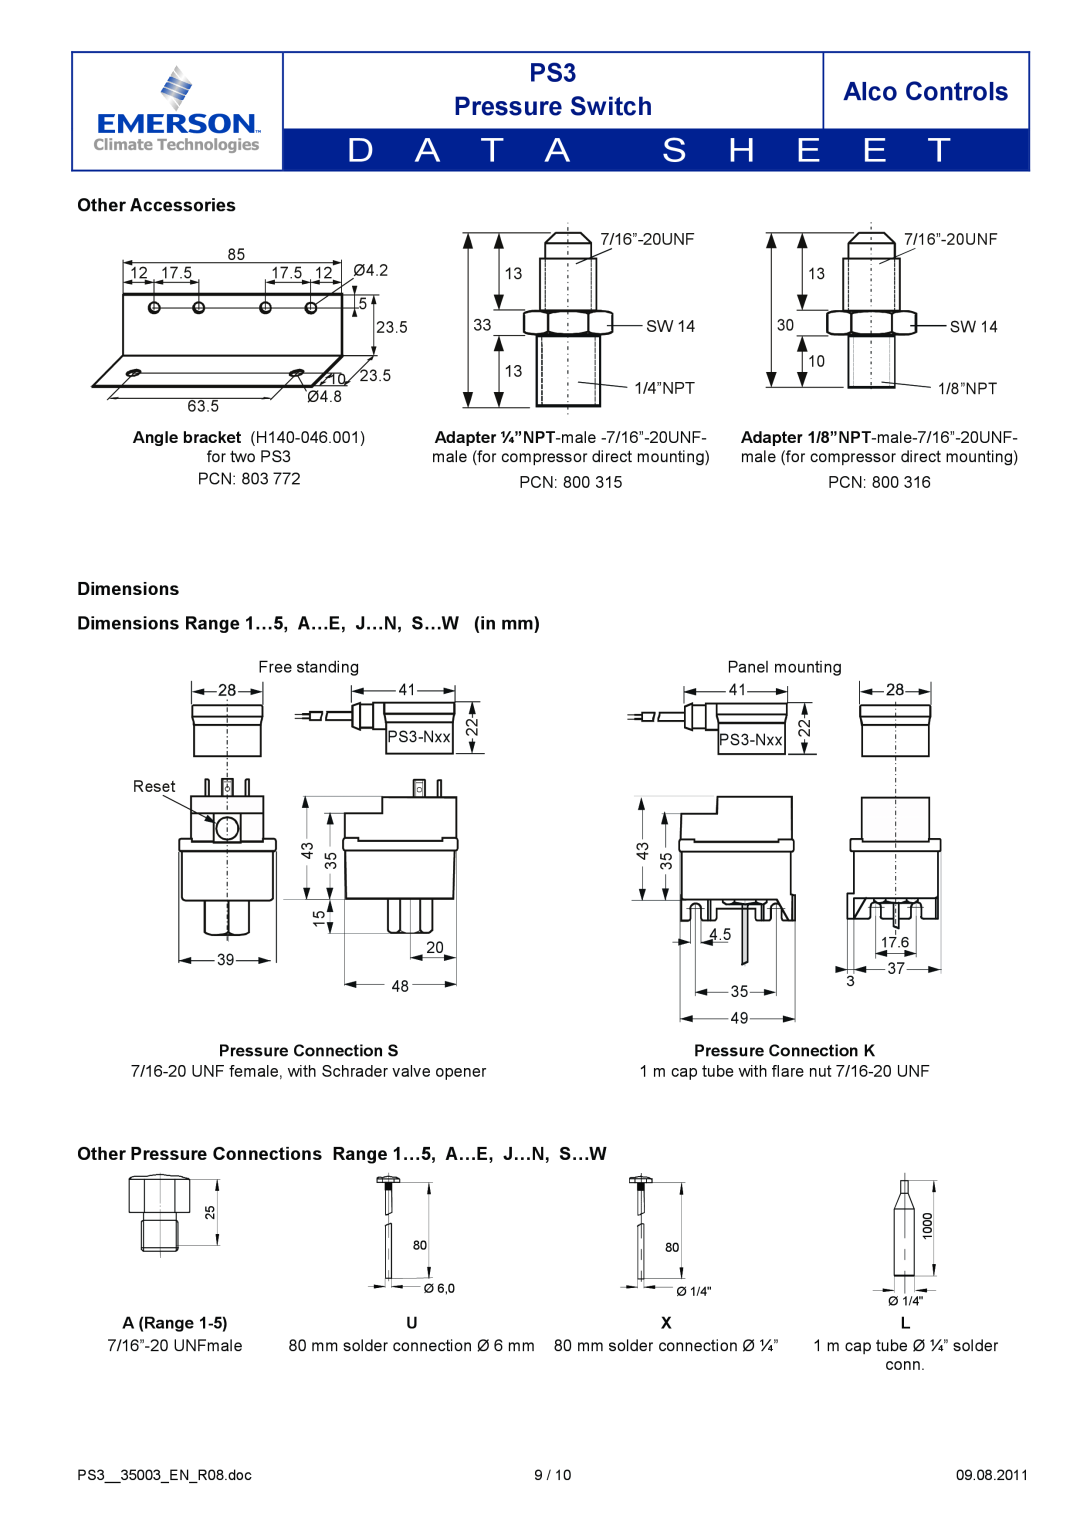 Emerson PS3 Other Accessories, Dimensions Dimensions Range 1…5, A…E, J…N, S…W in mm, Alco Controls, Pressure Switch, 17.5 